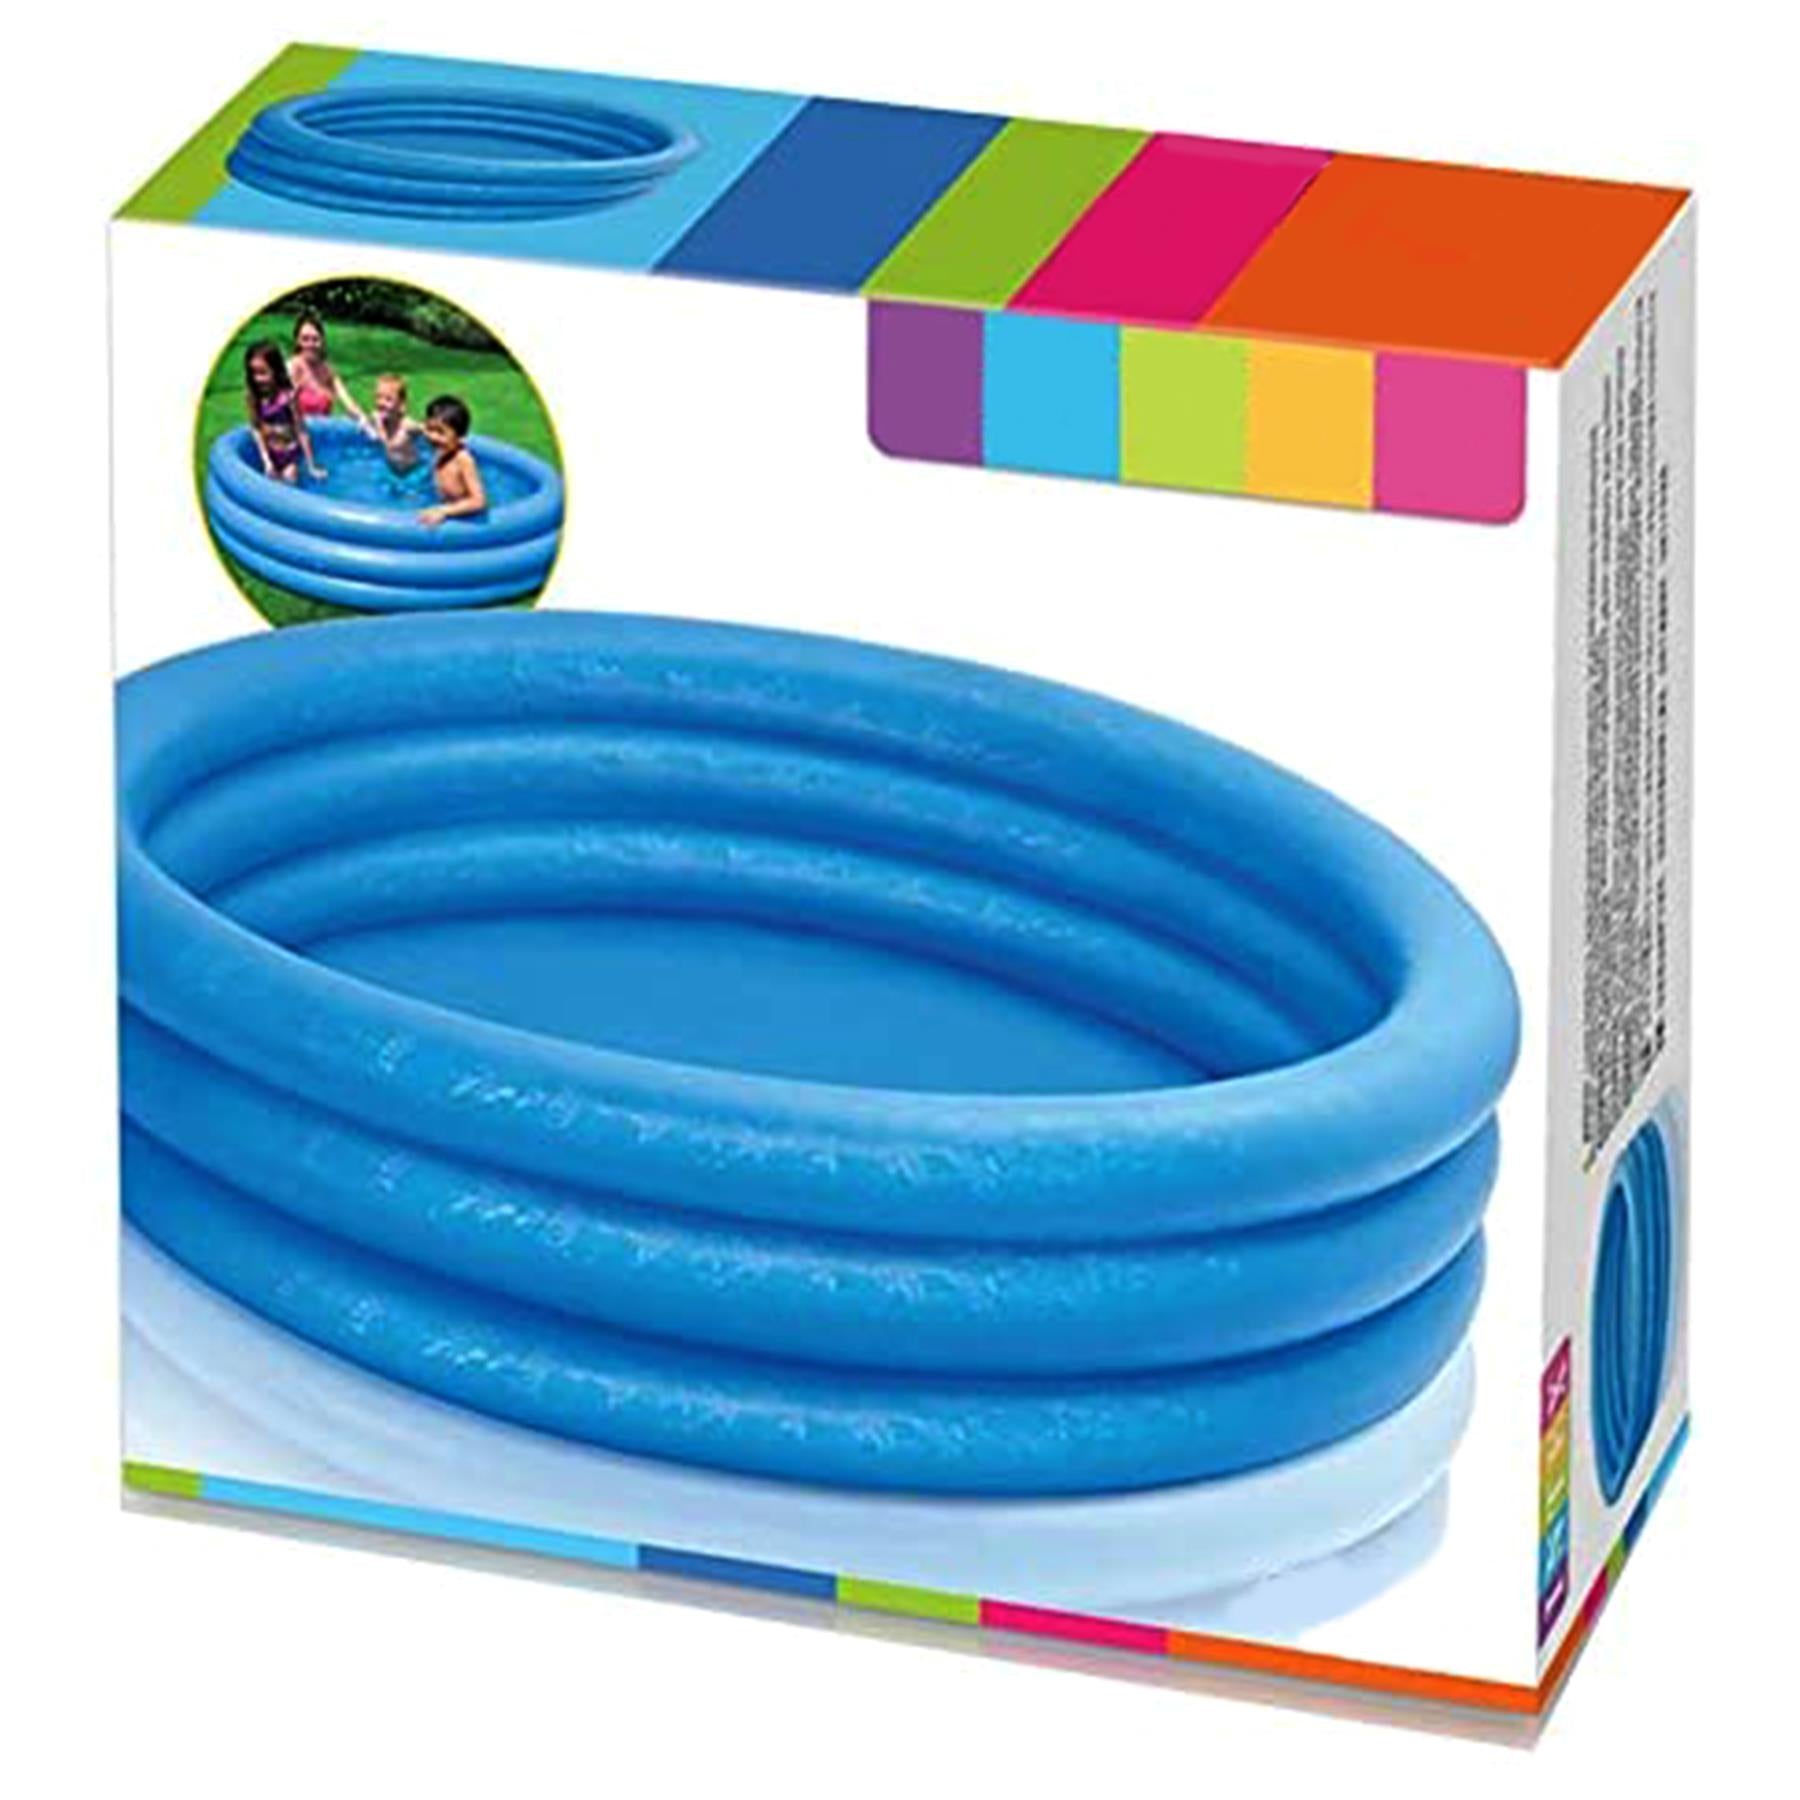 Intex 45" Paddling Pool Intex - The Magic Toy Shop